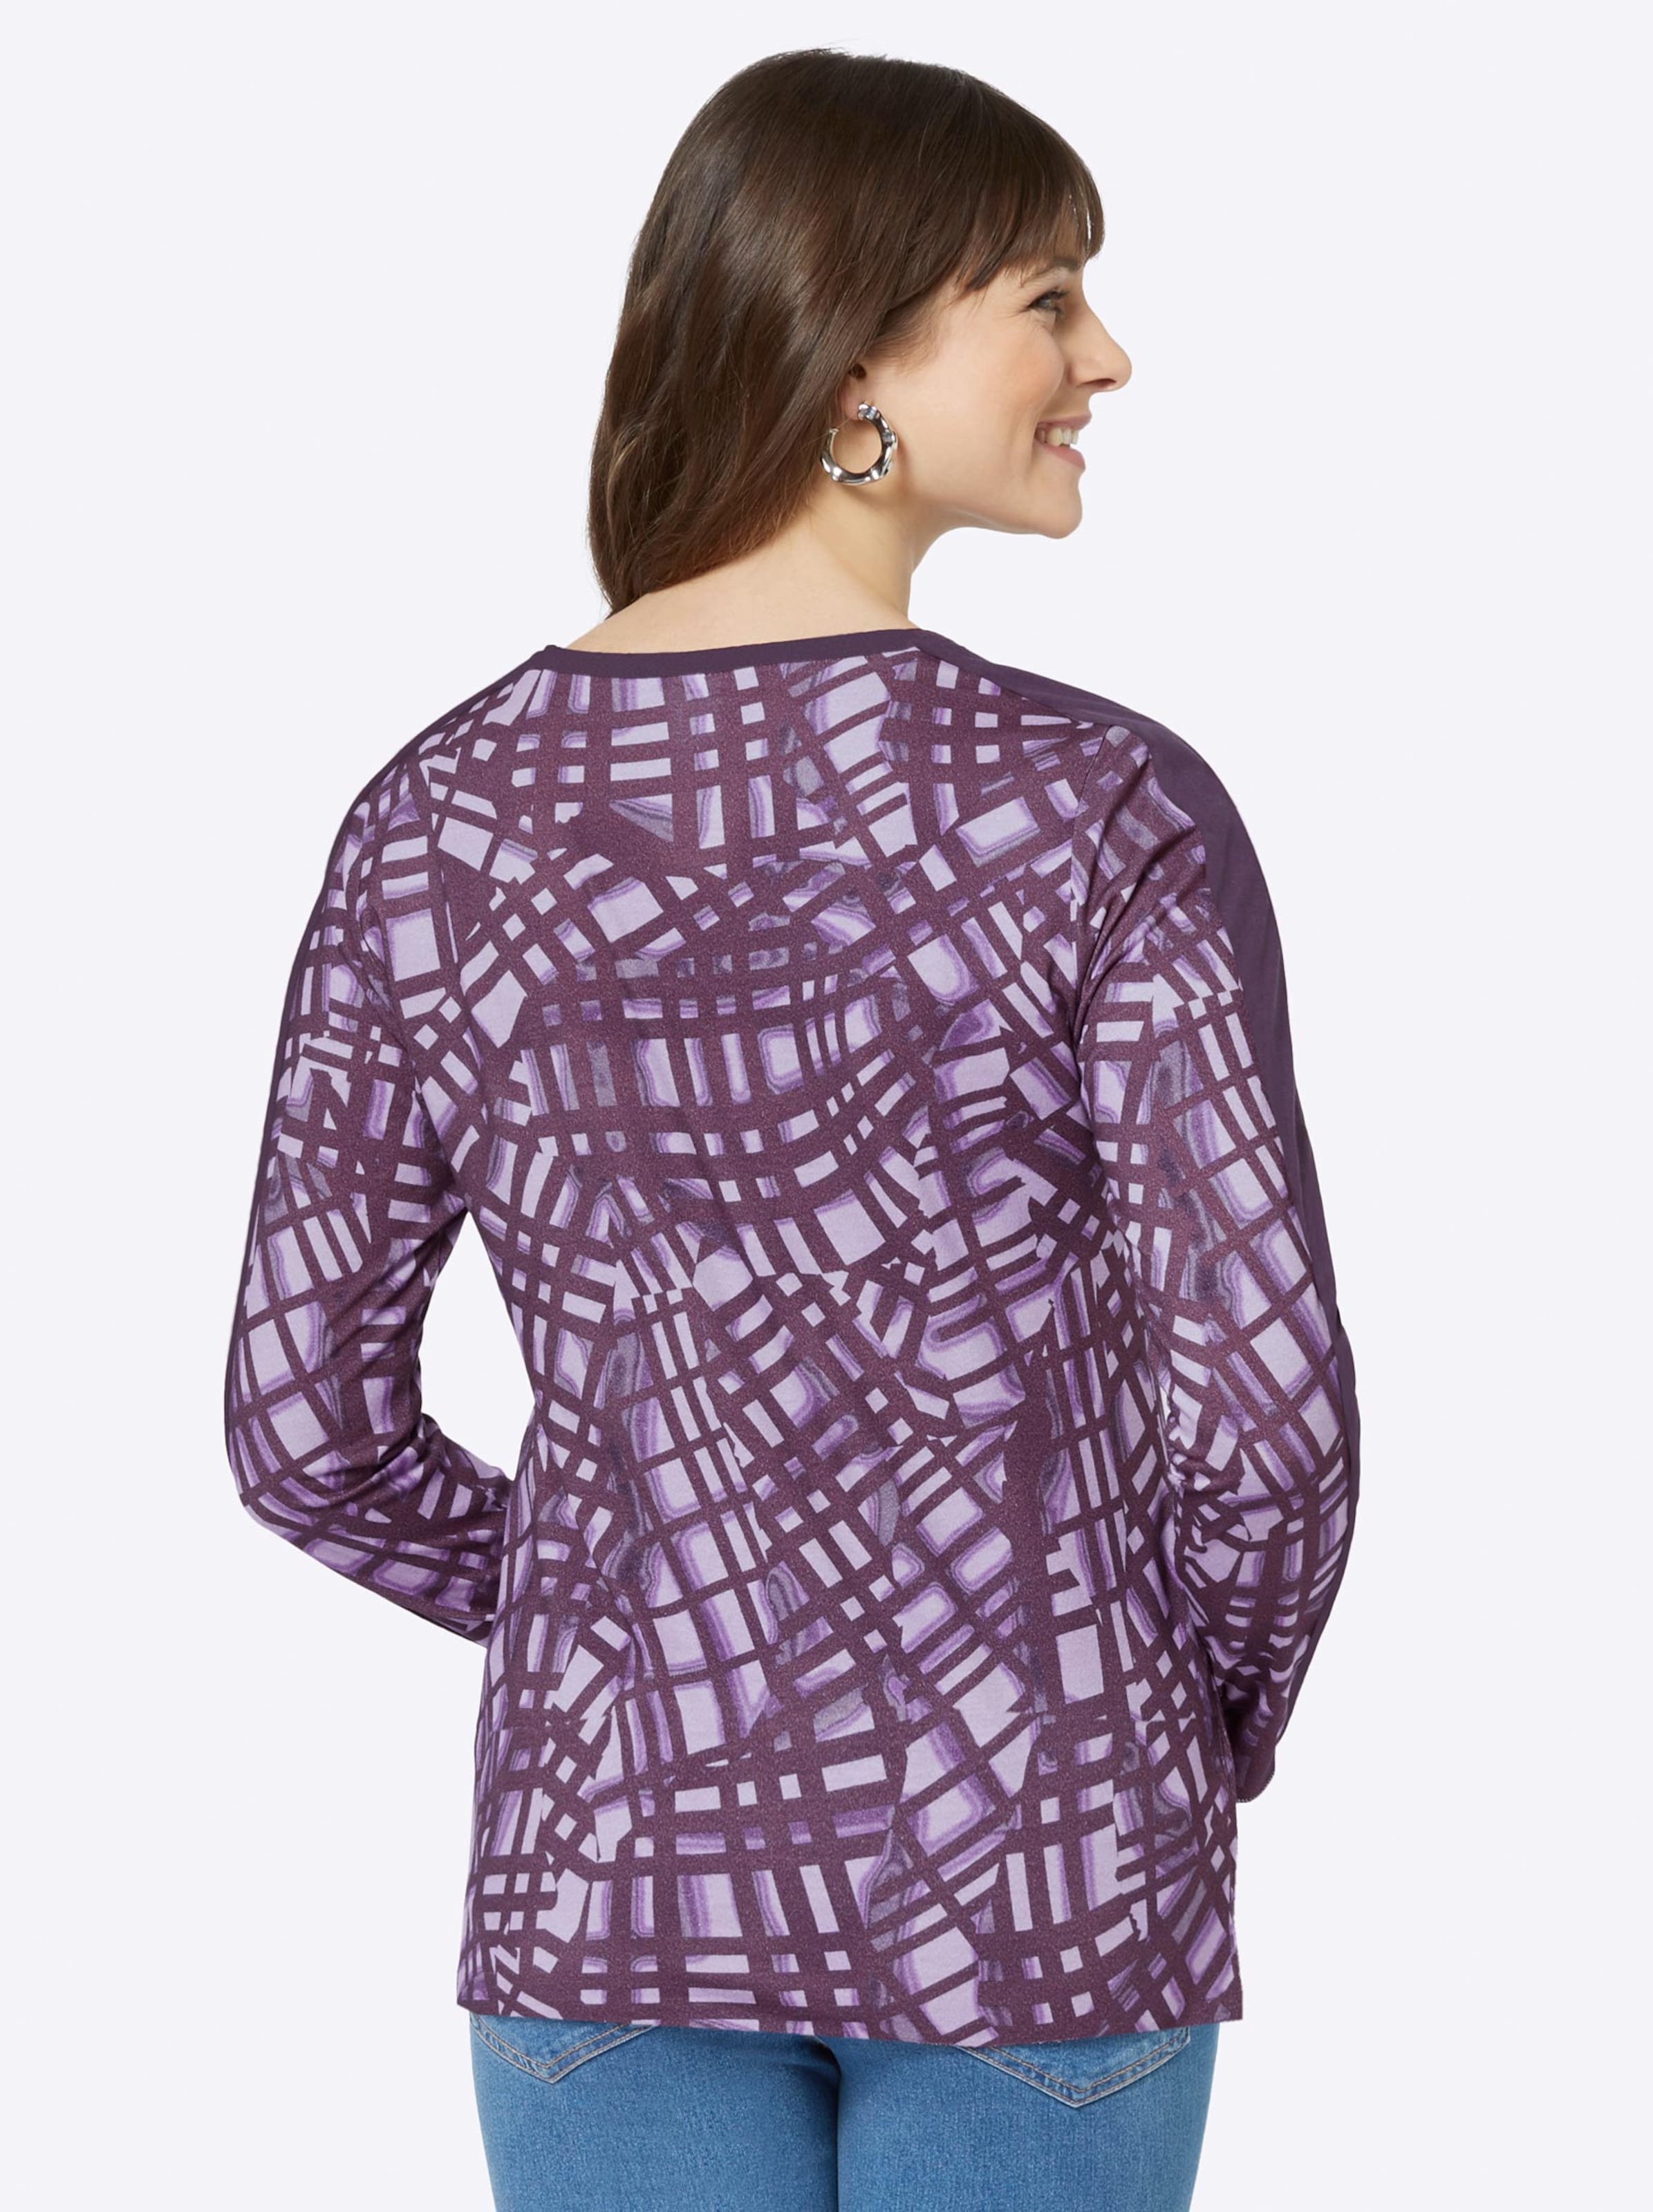 Damenmode Shirts Langarmshirt in aubergine-flieder-bedruckt 